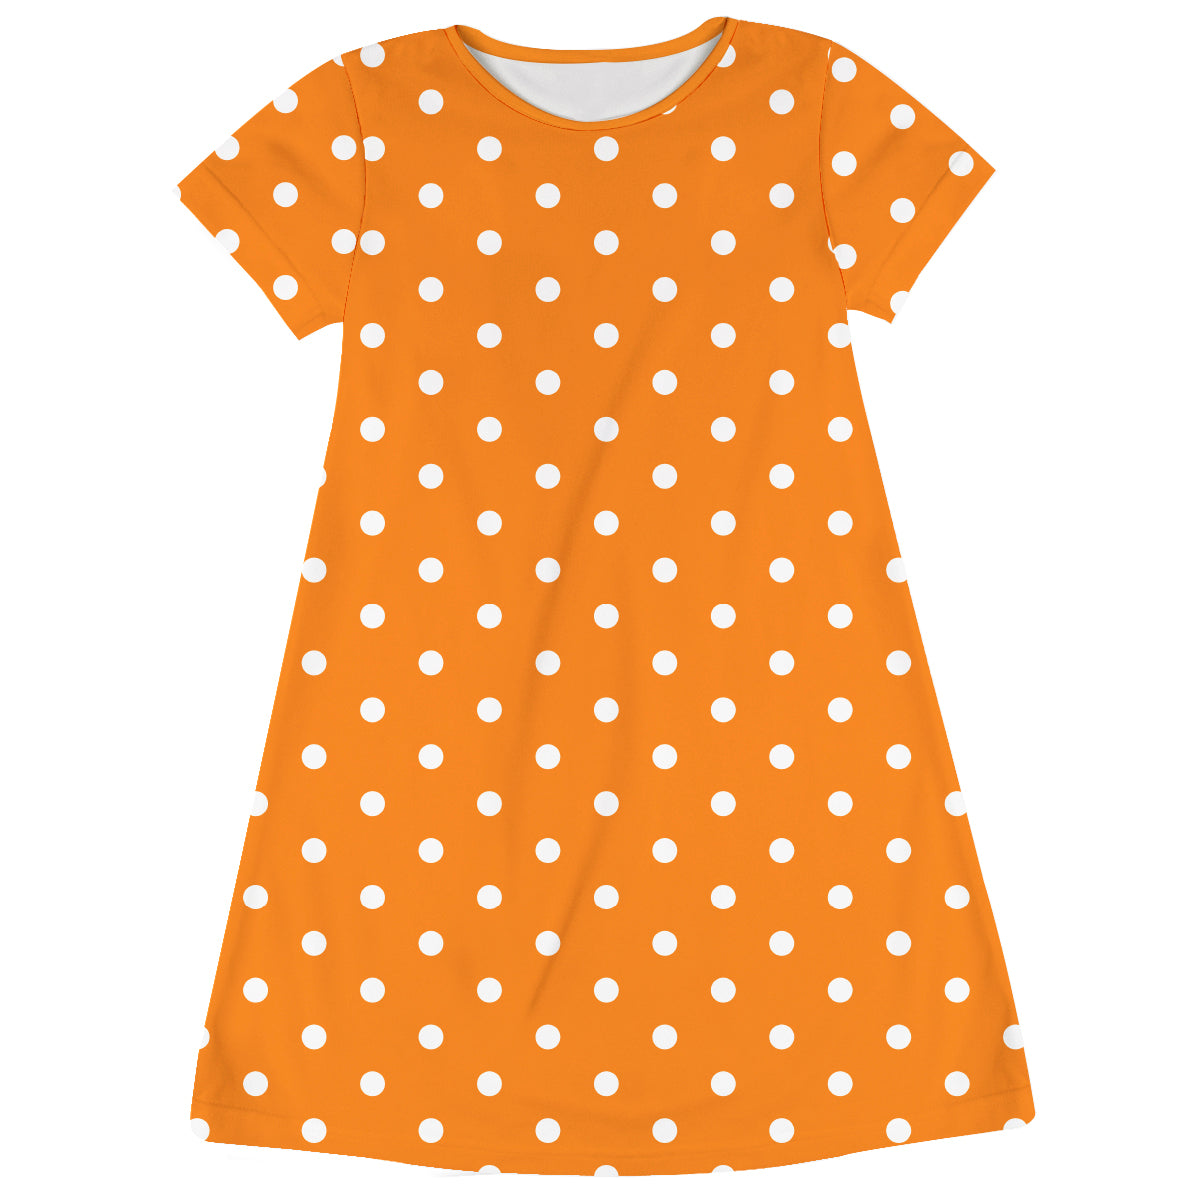 Polka Dots Print Orange and White Short Sleeve A Line Dress